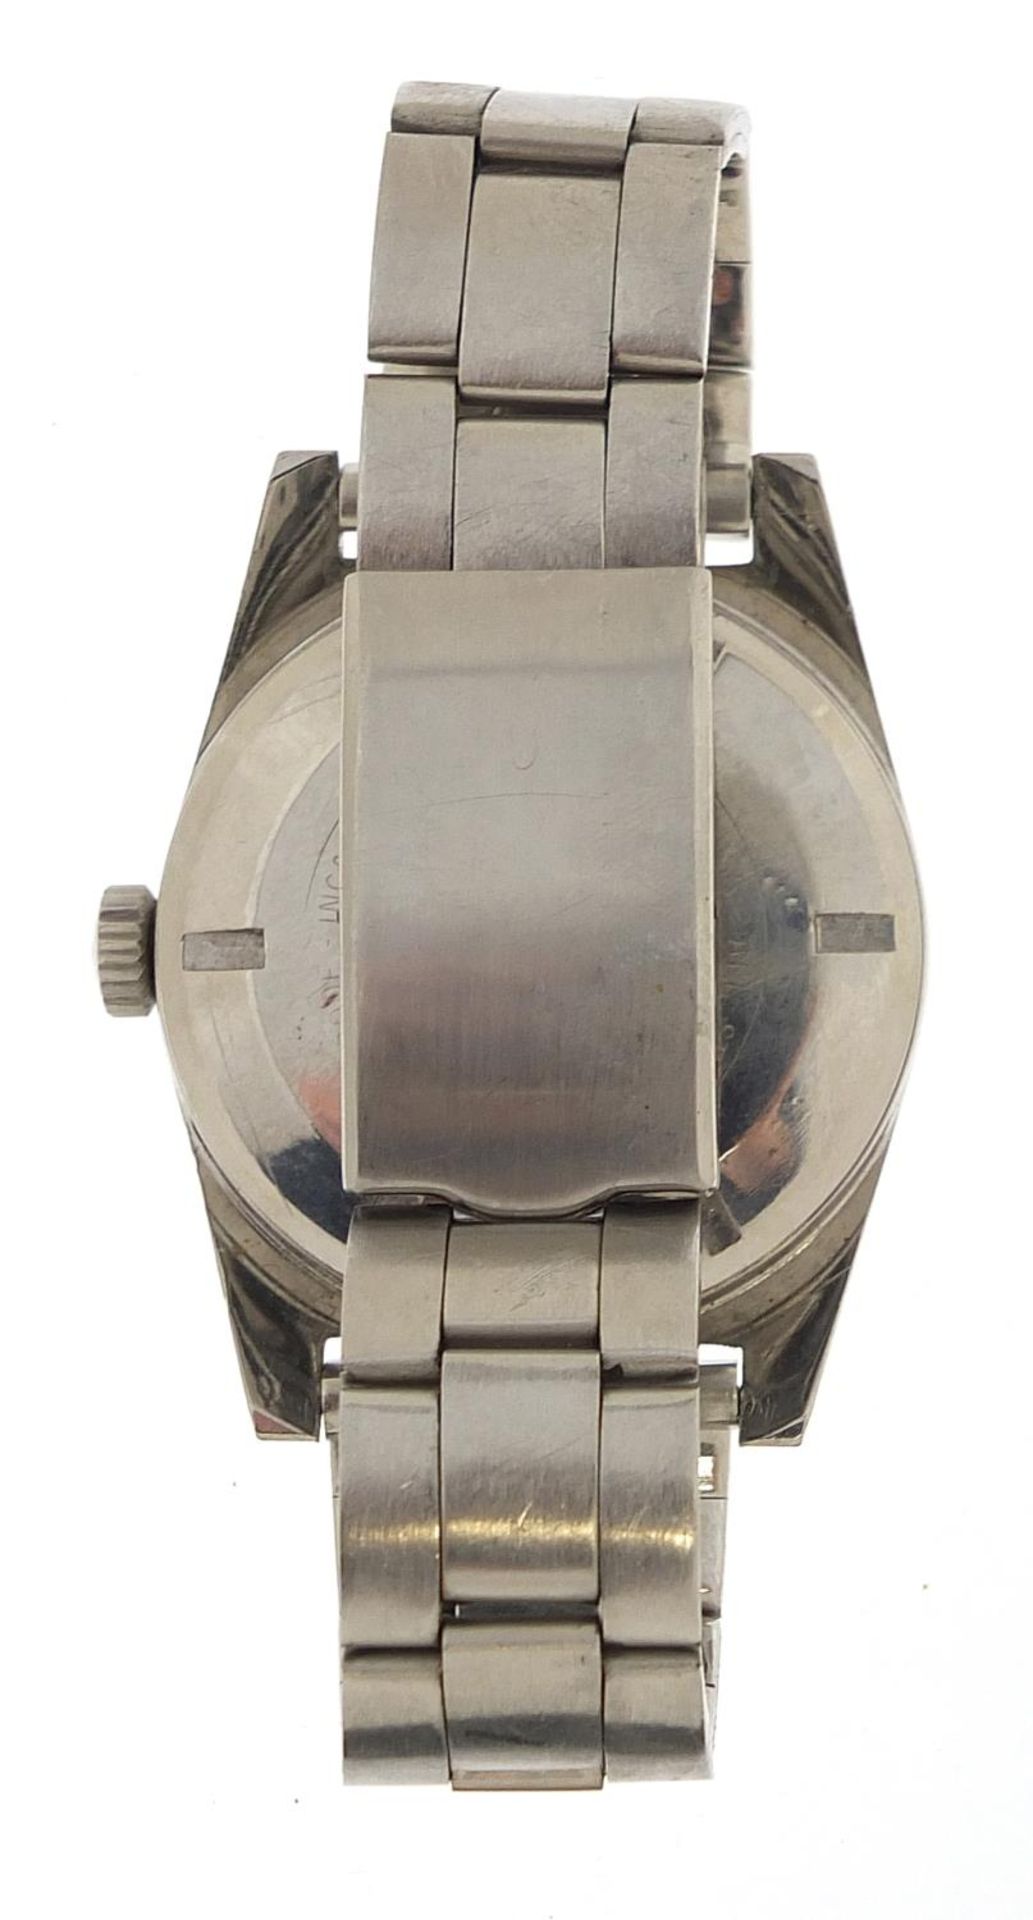 Marc Nicolet, gentlemen's Skin Diver automatic wristwatch with date aperture, 35mm in diameter - Image 3 of 5